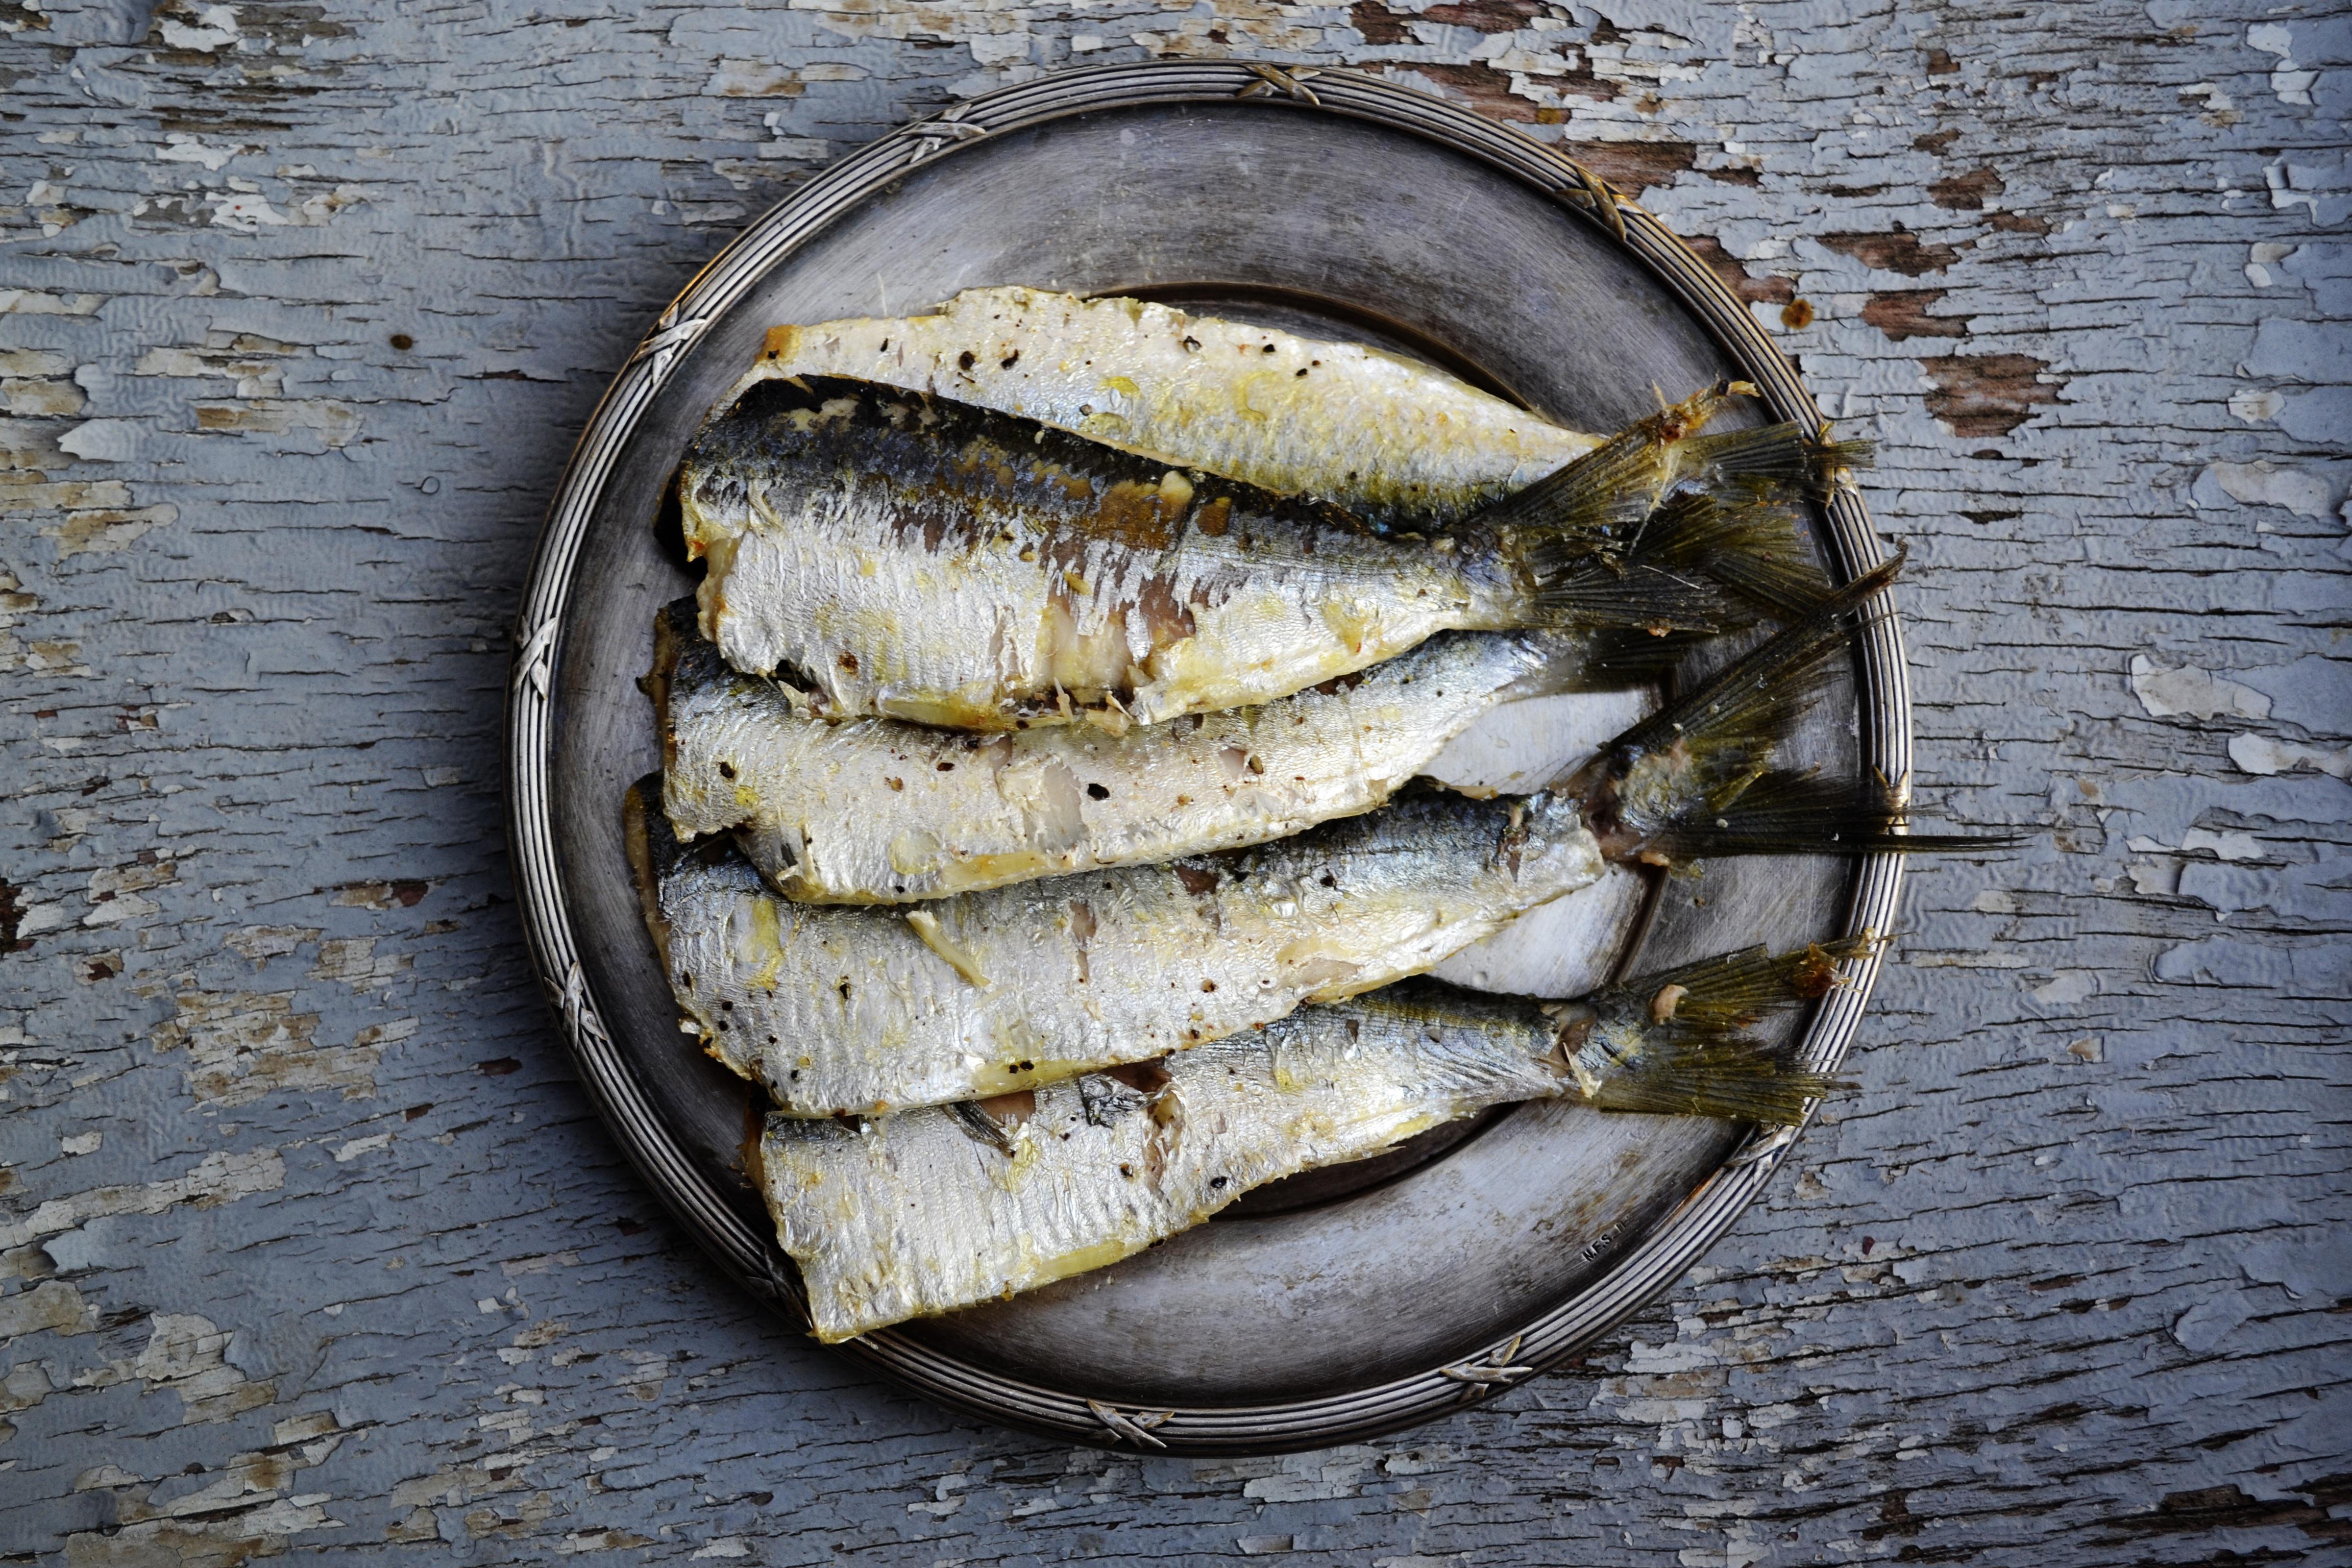 Marinated sardines